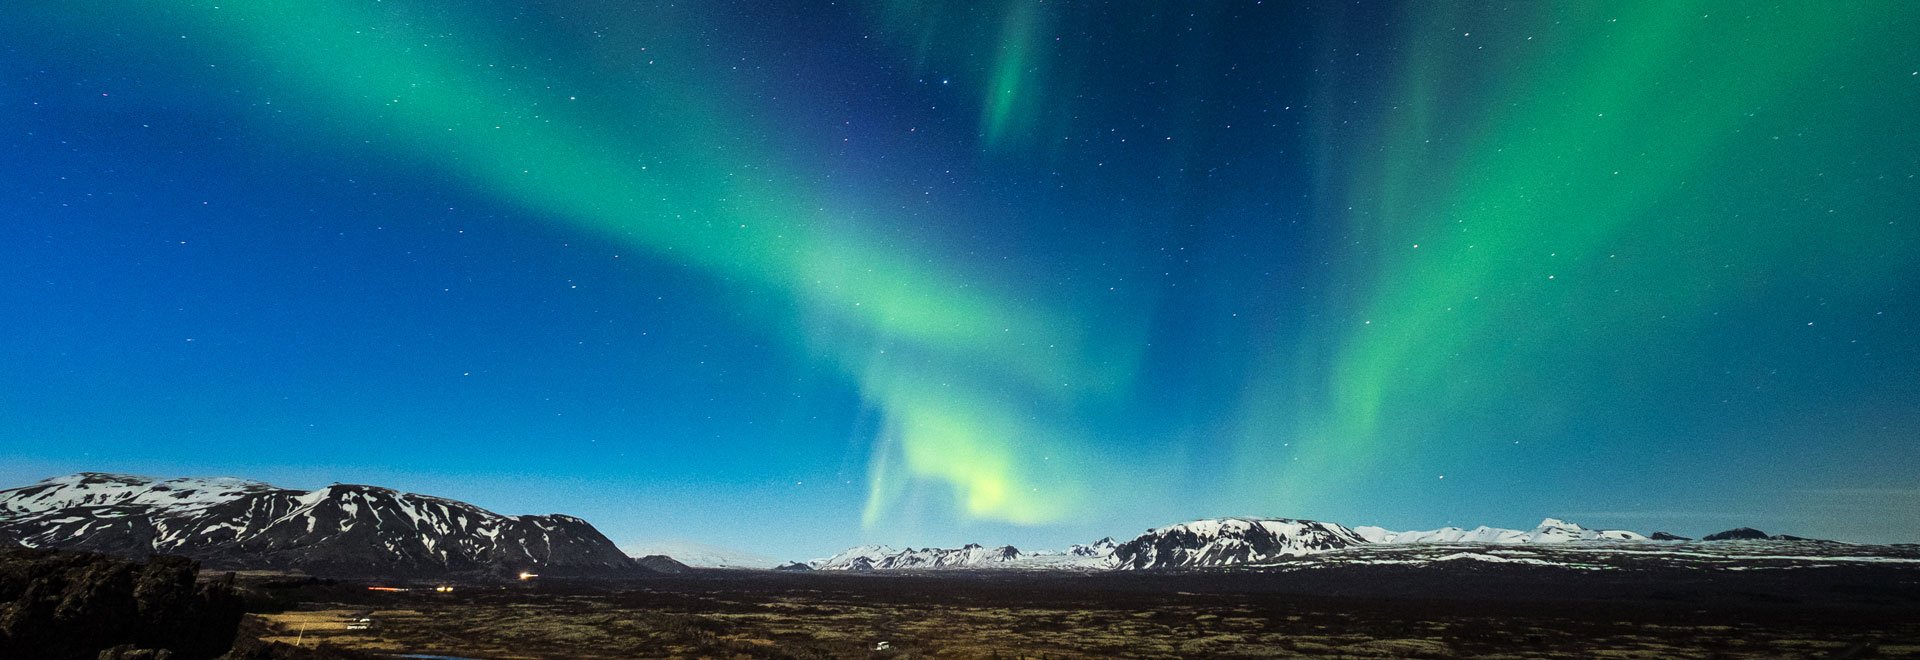 Europe TM Iceland Winter Landscapes Northern Lights MH